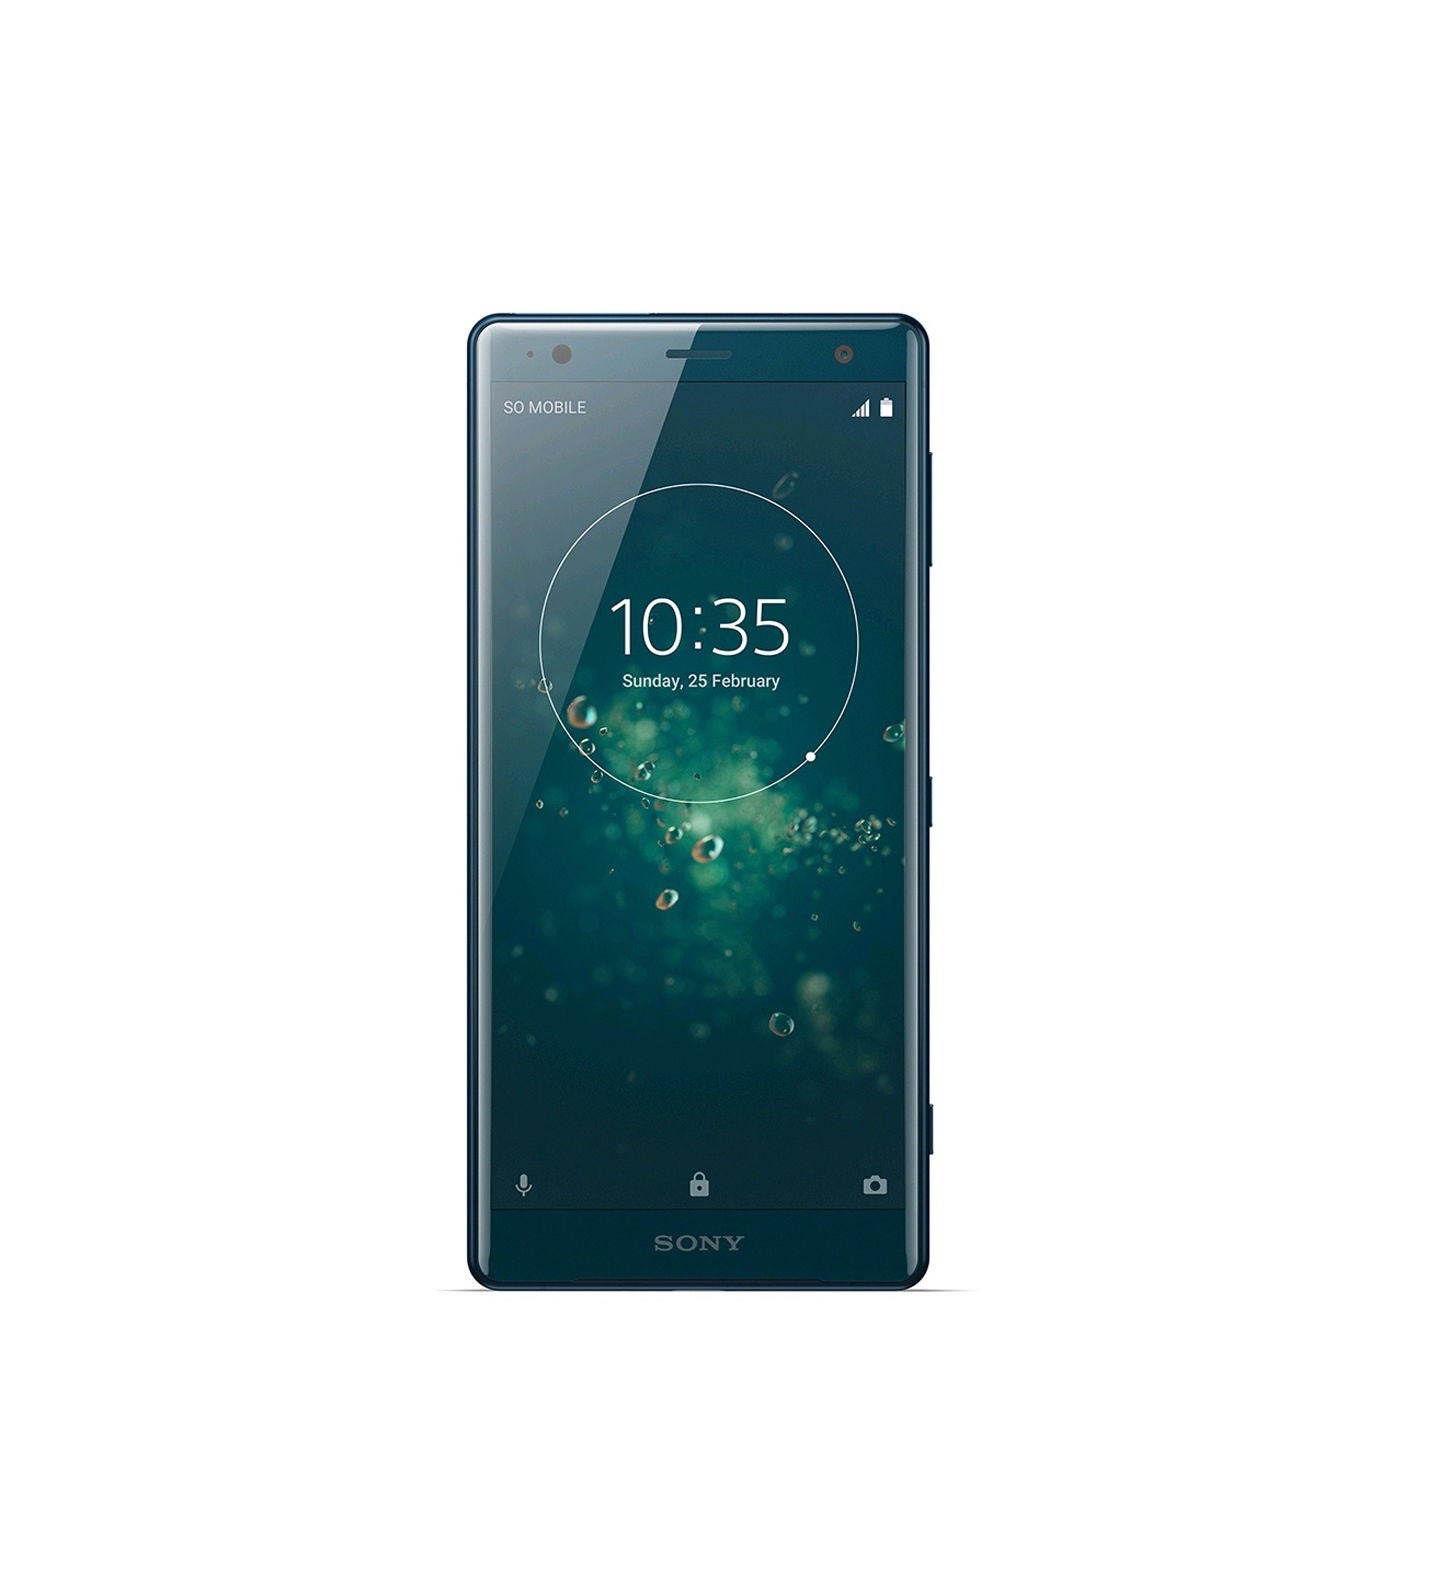 Sony Xperia XZ2 Mobile Phone